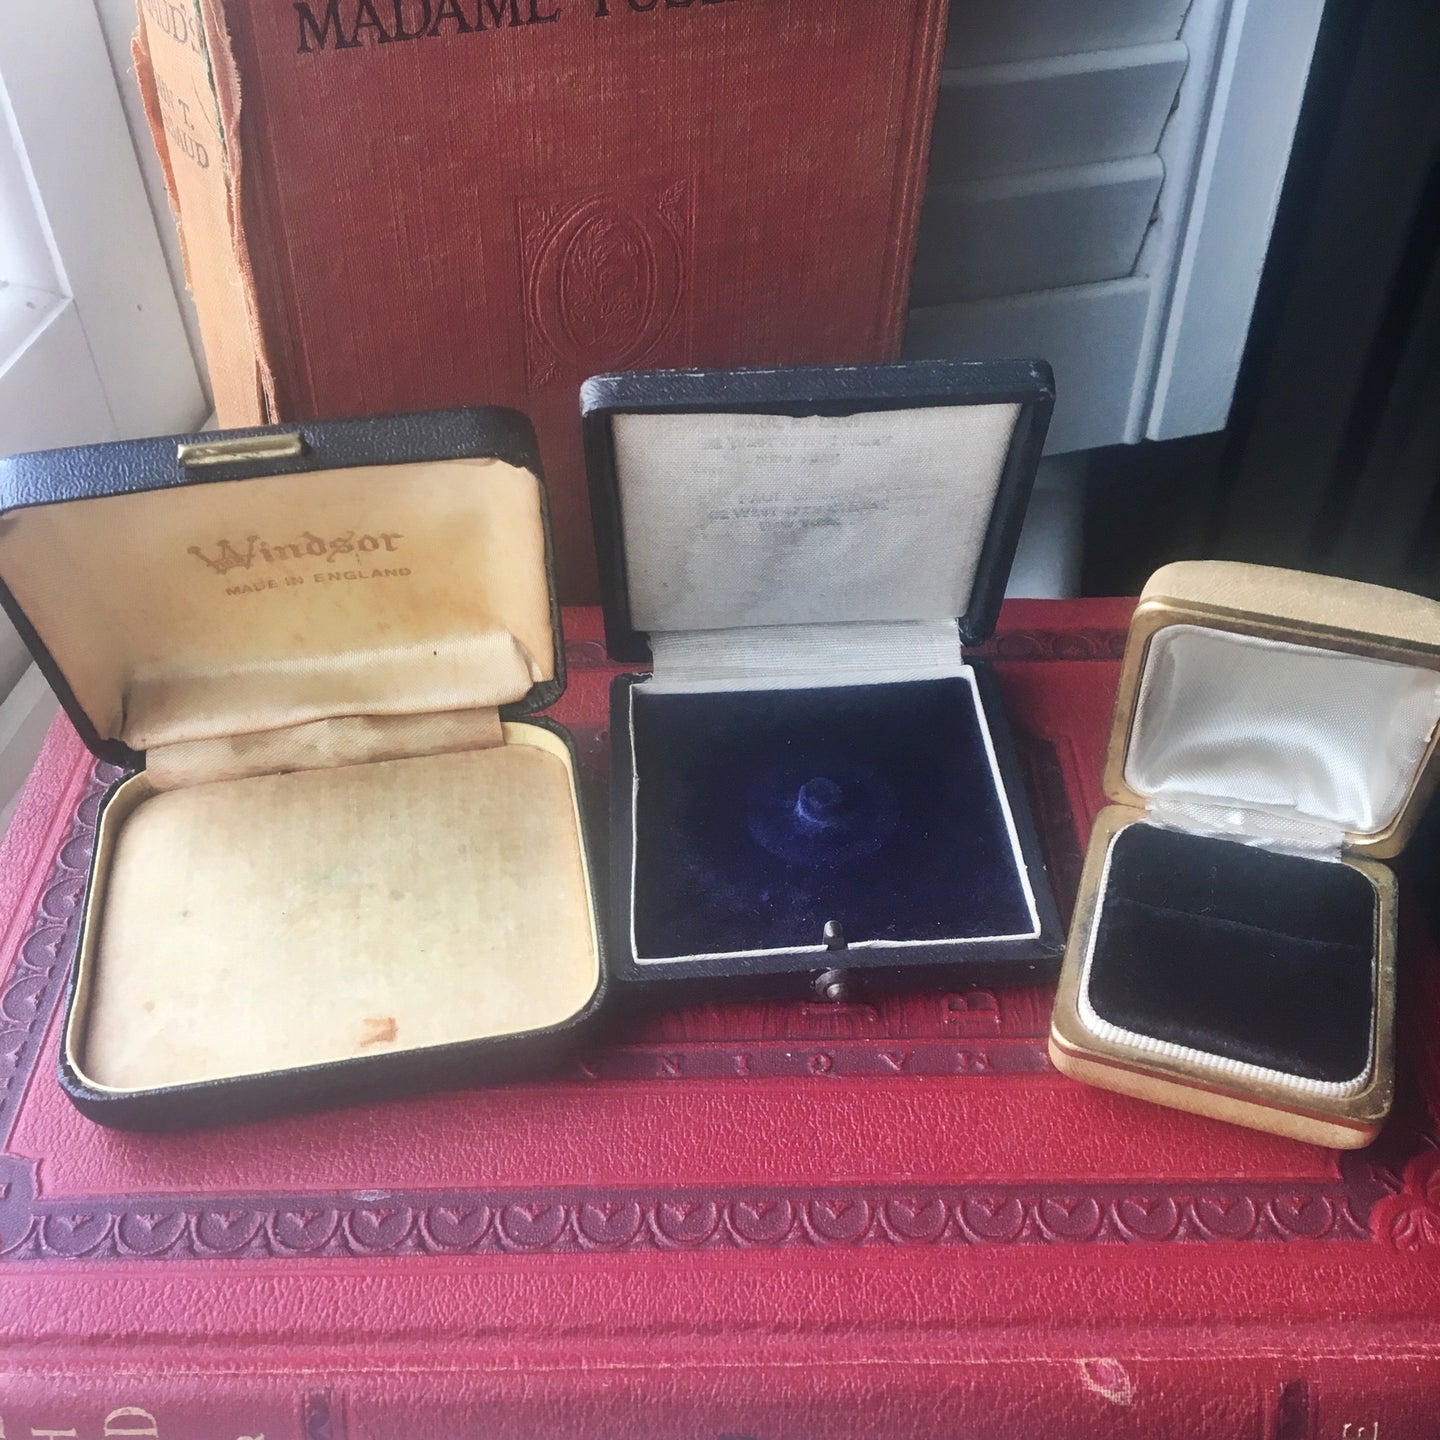 vintage jewelry box